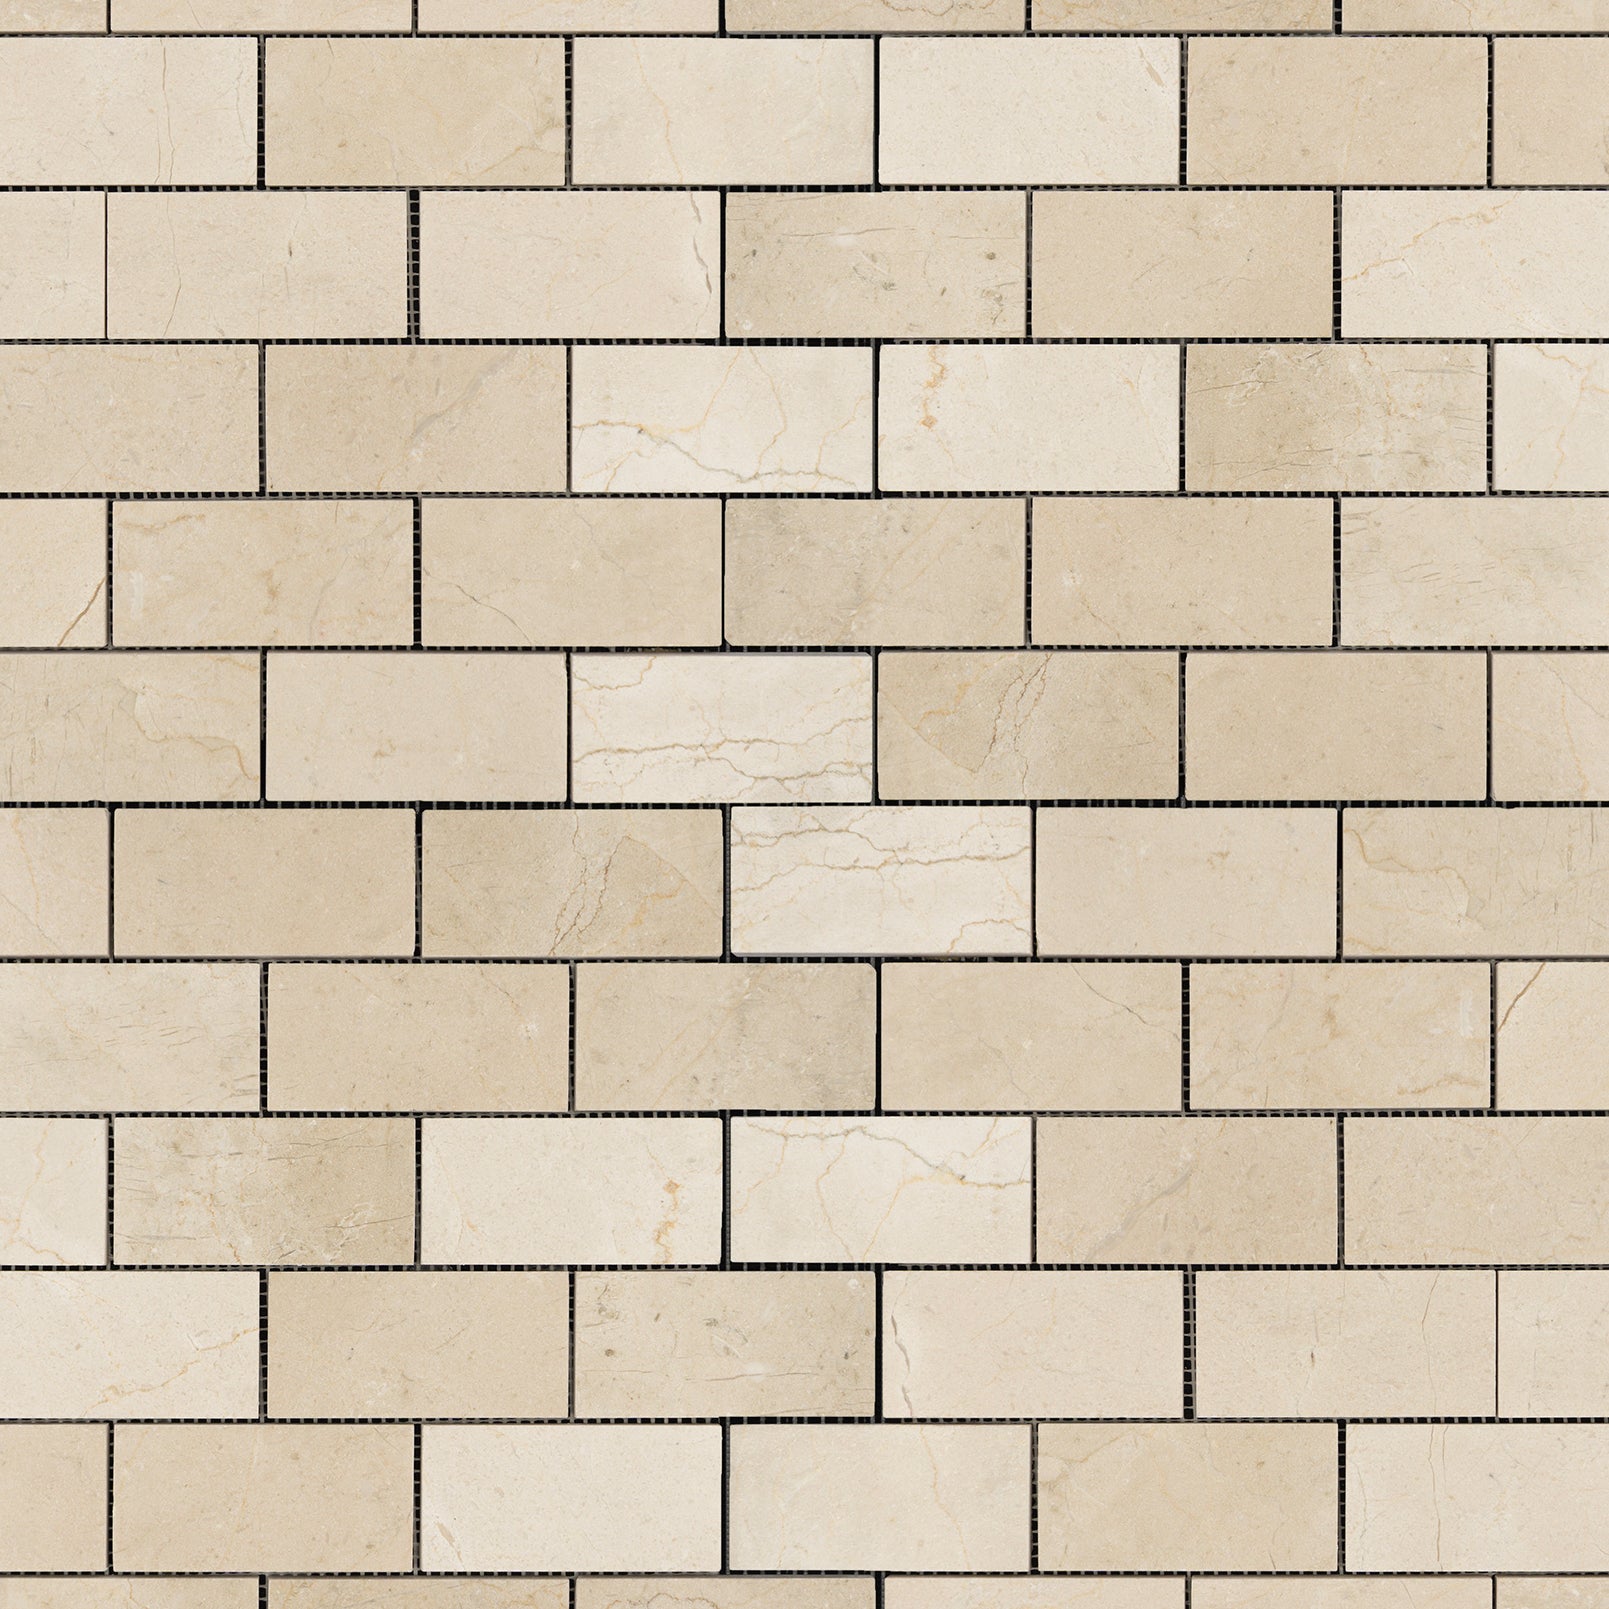 Crema Marfil Brick 2x4 Mosaic